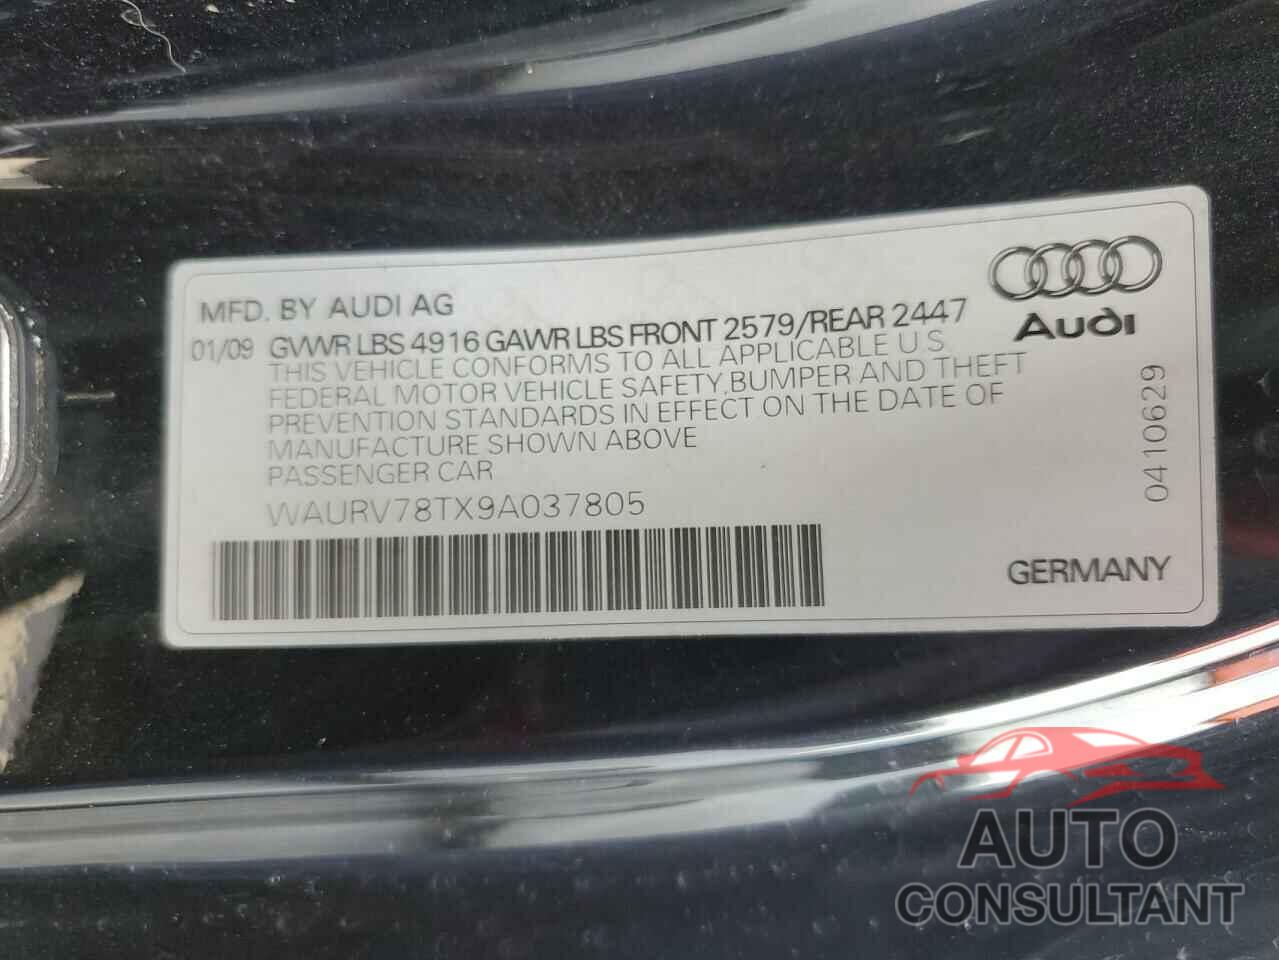 AUDI S5/RS5 2009 - WAURV78TX9A037805